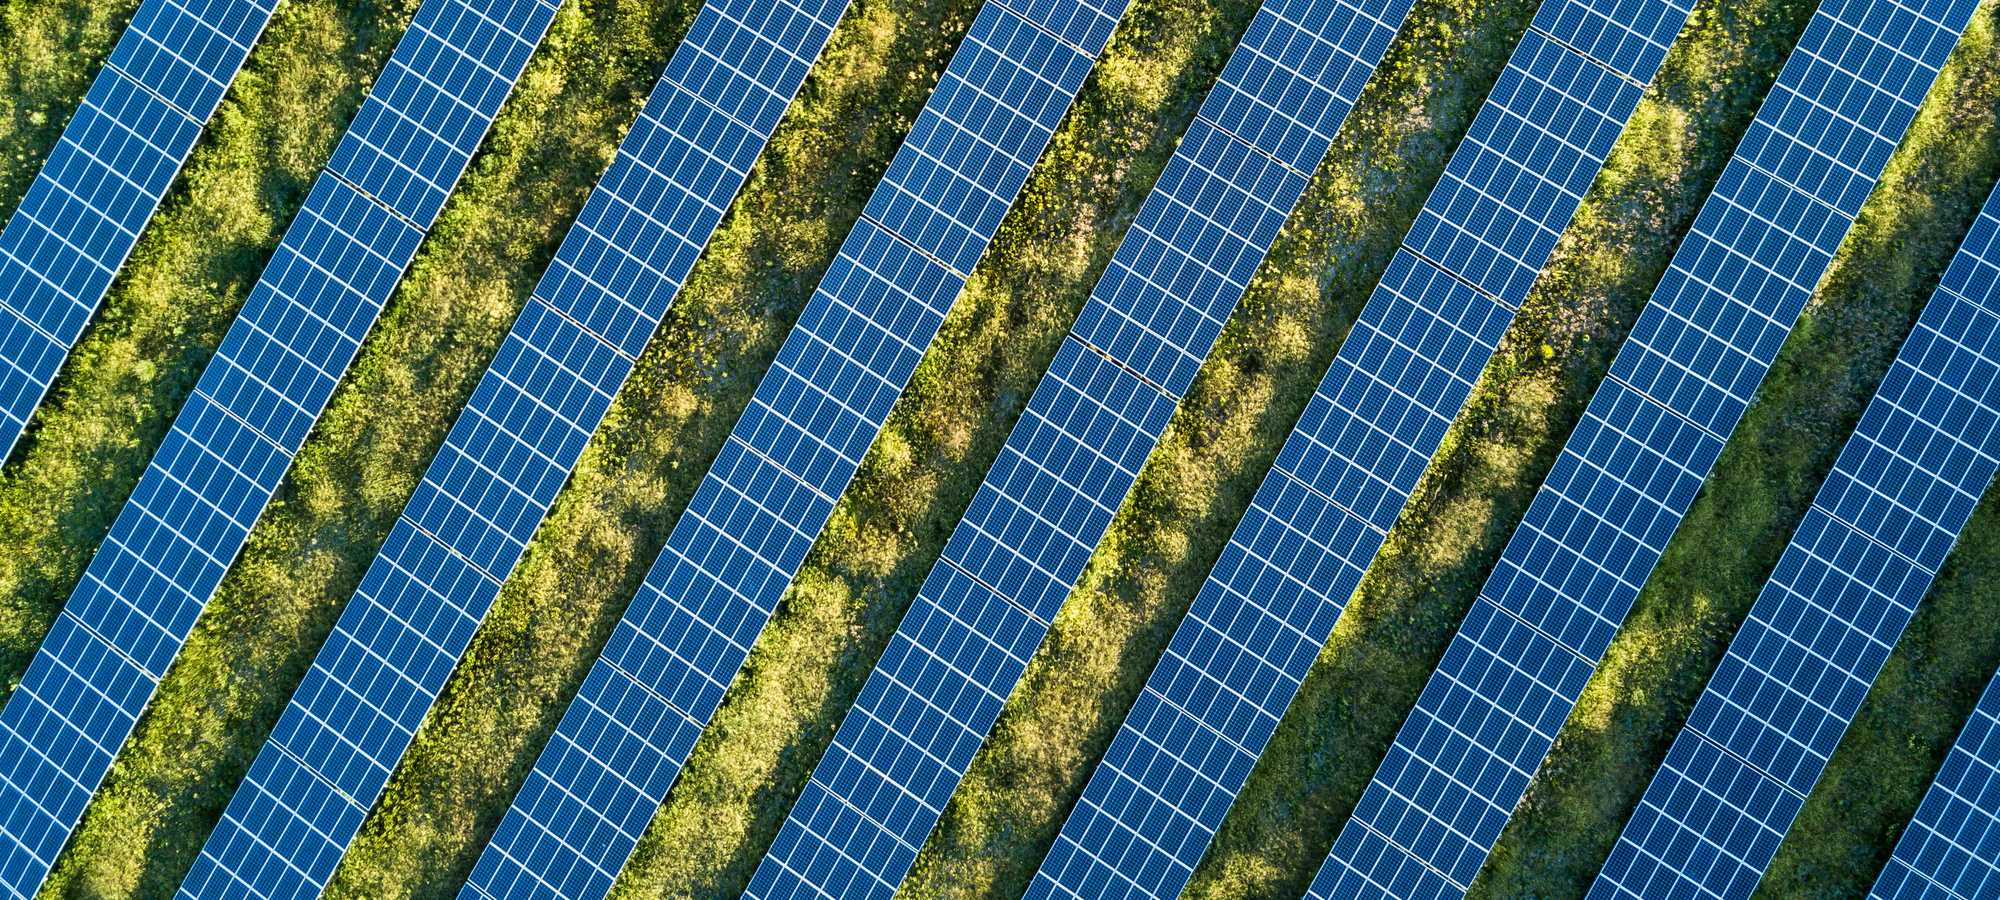 Solar farm from above.